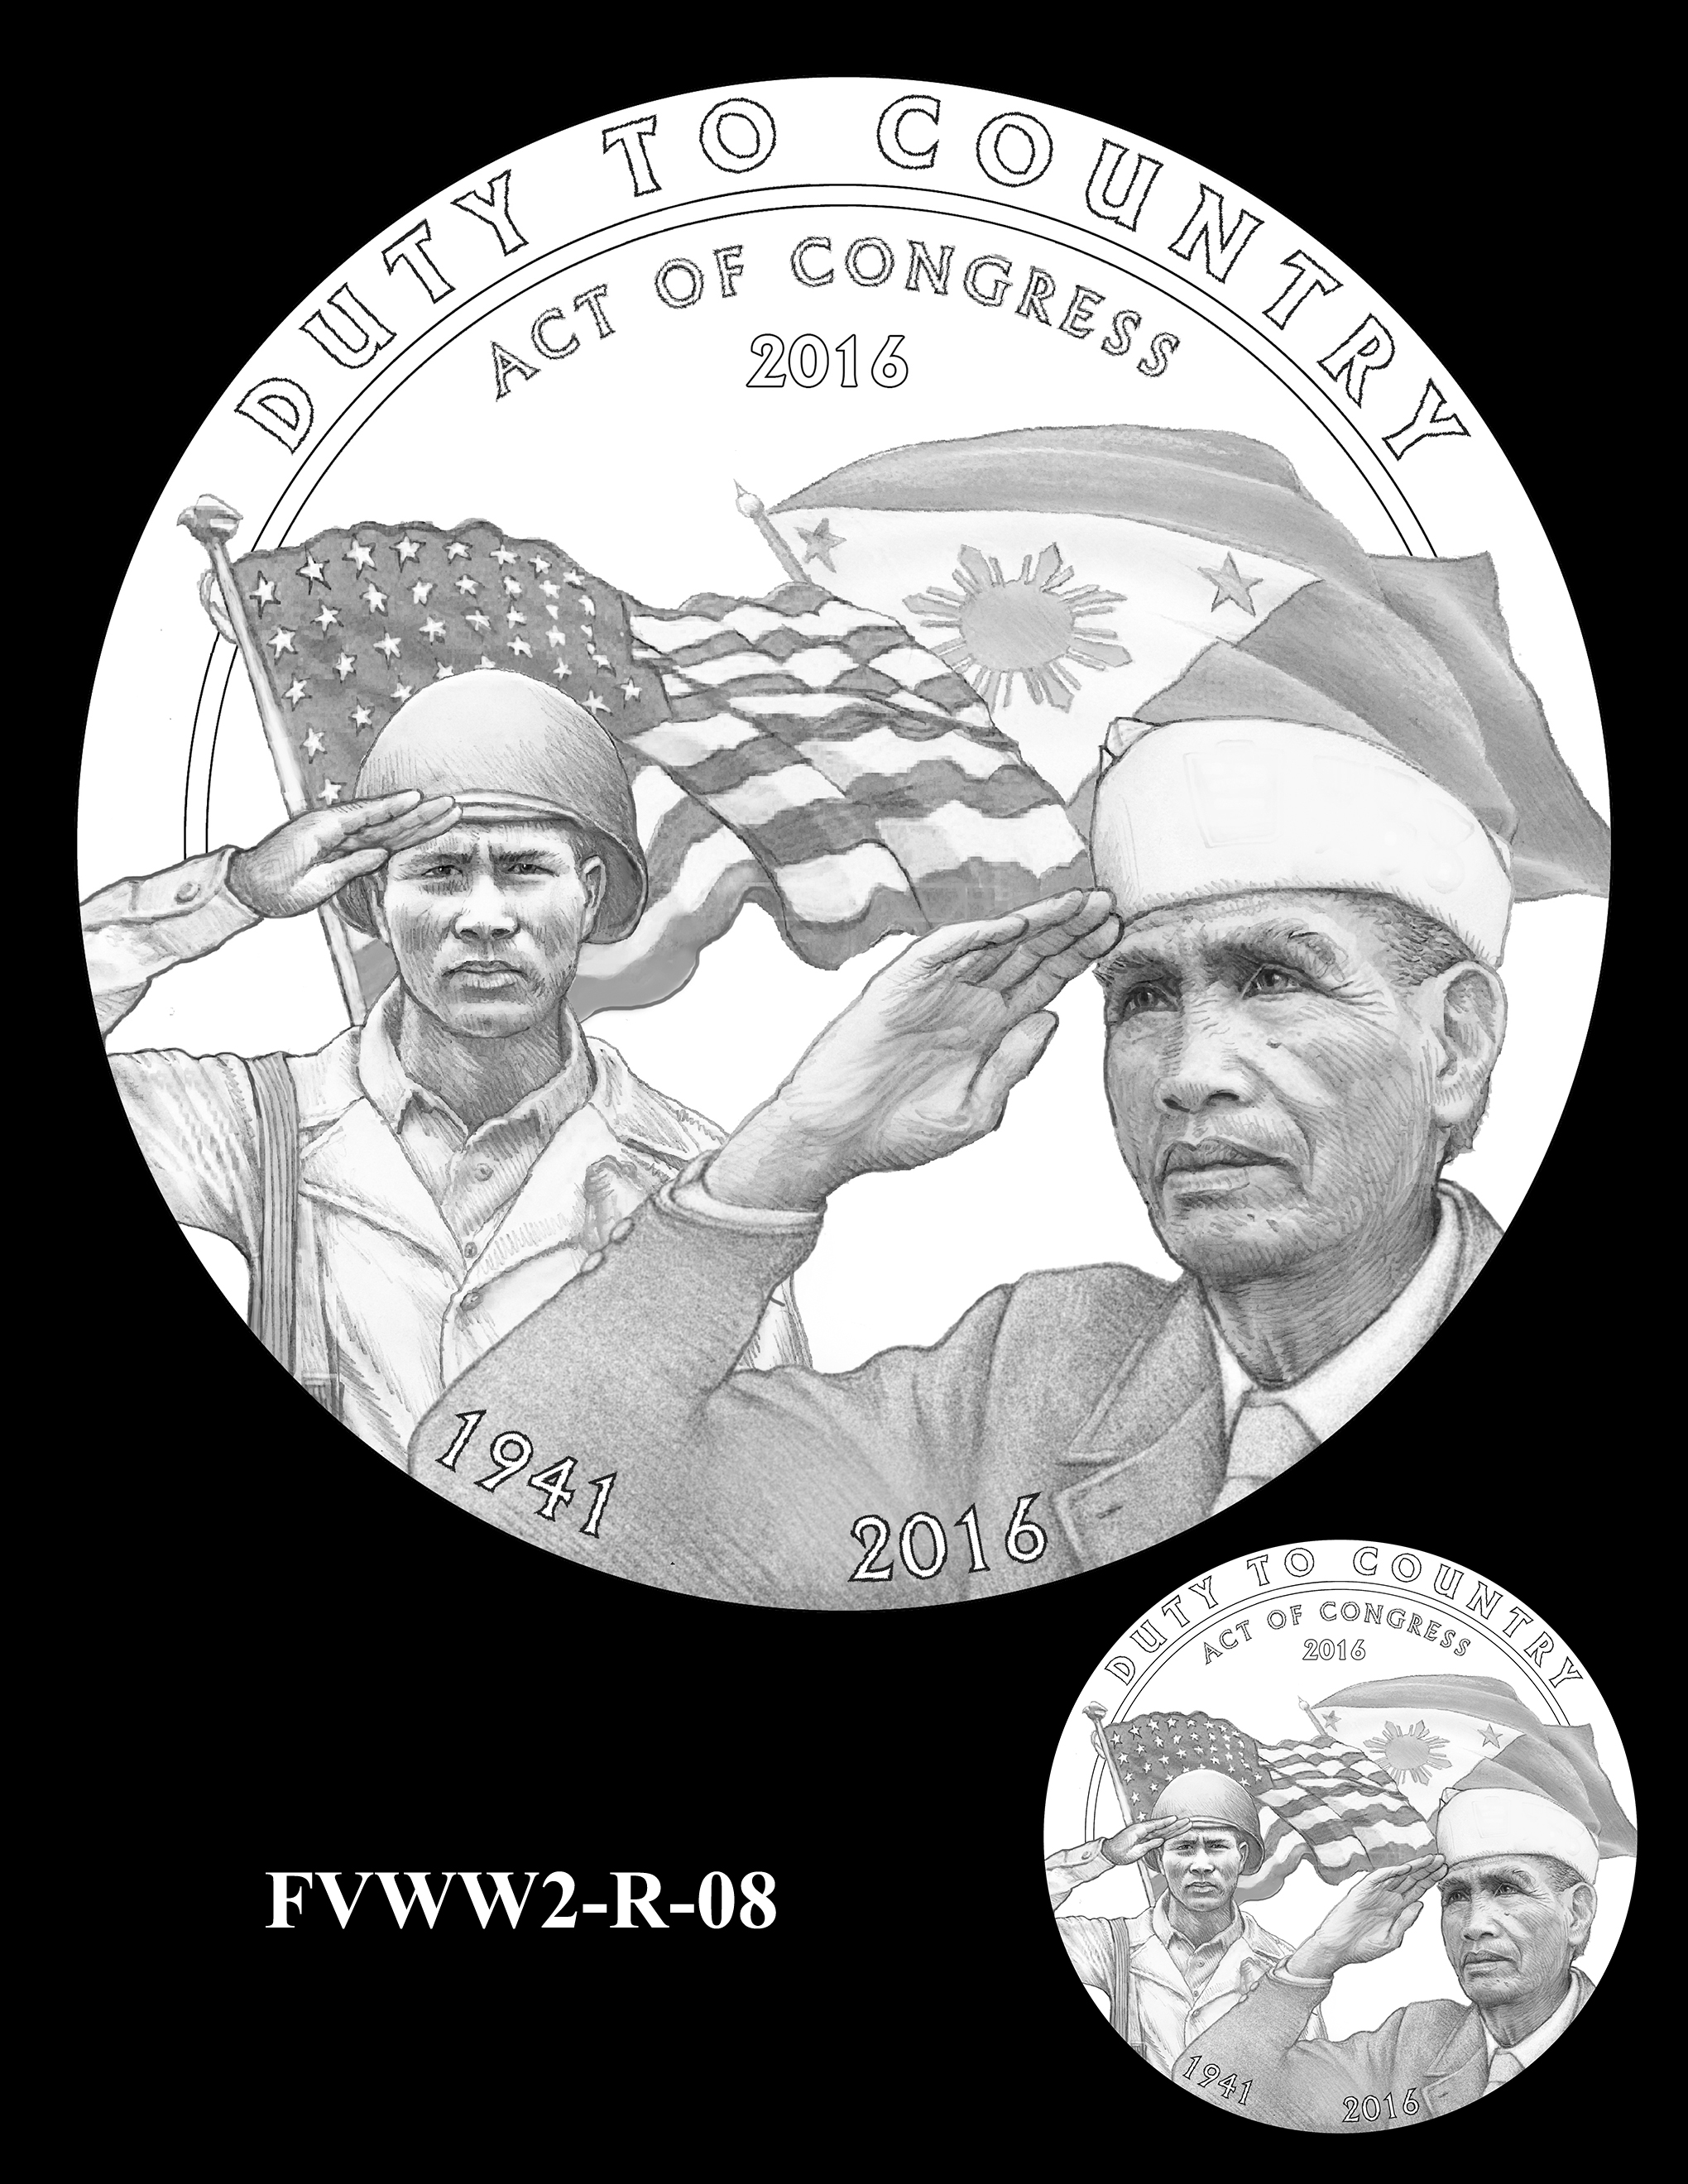 FVWW2-R-08 -- Filipino Veterans of World War II Congressional Gold Medal